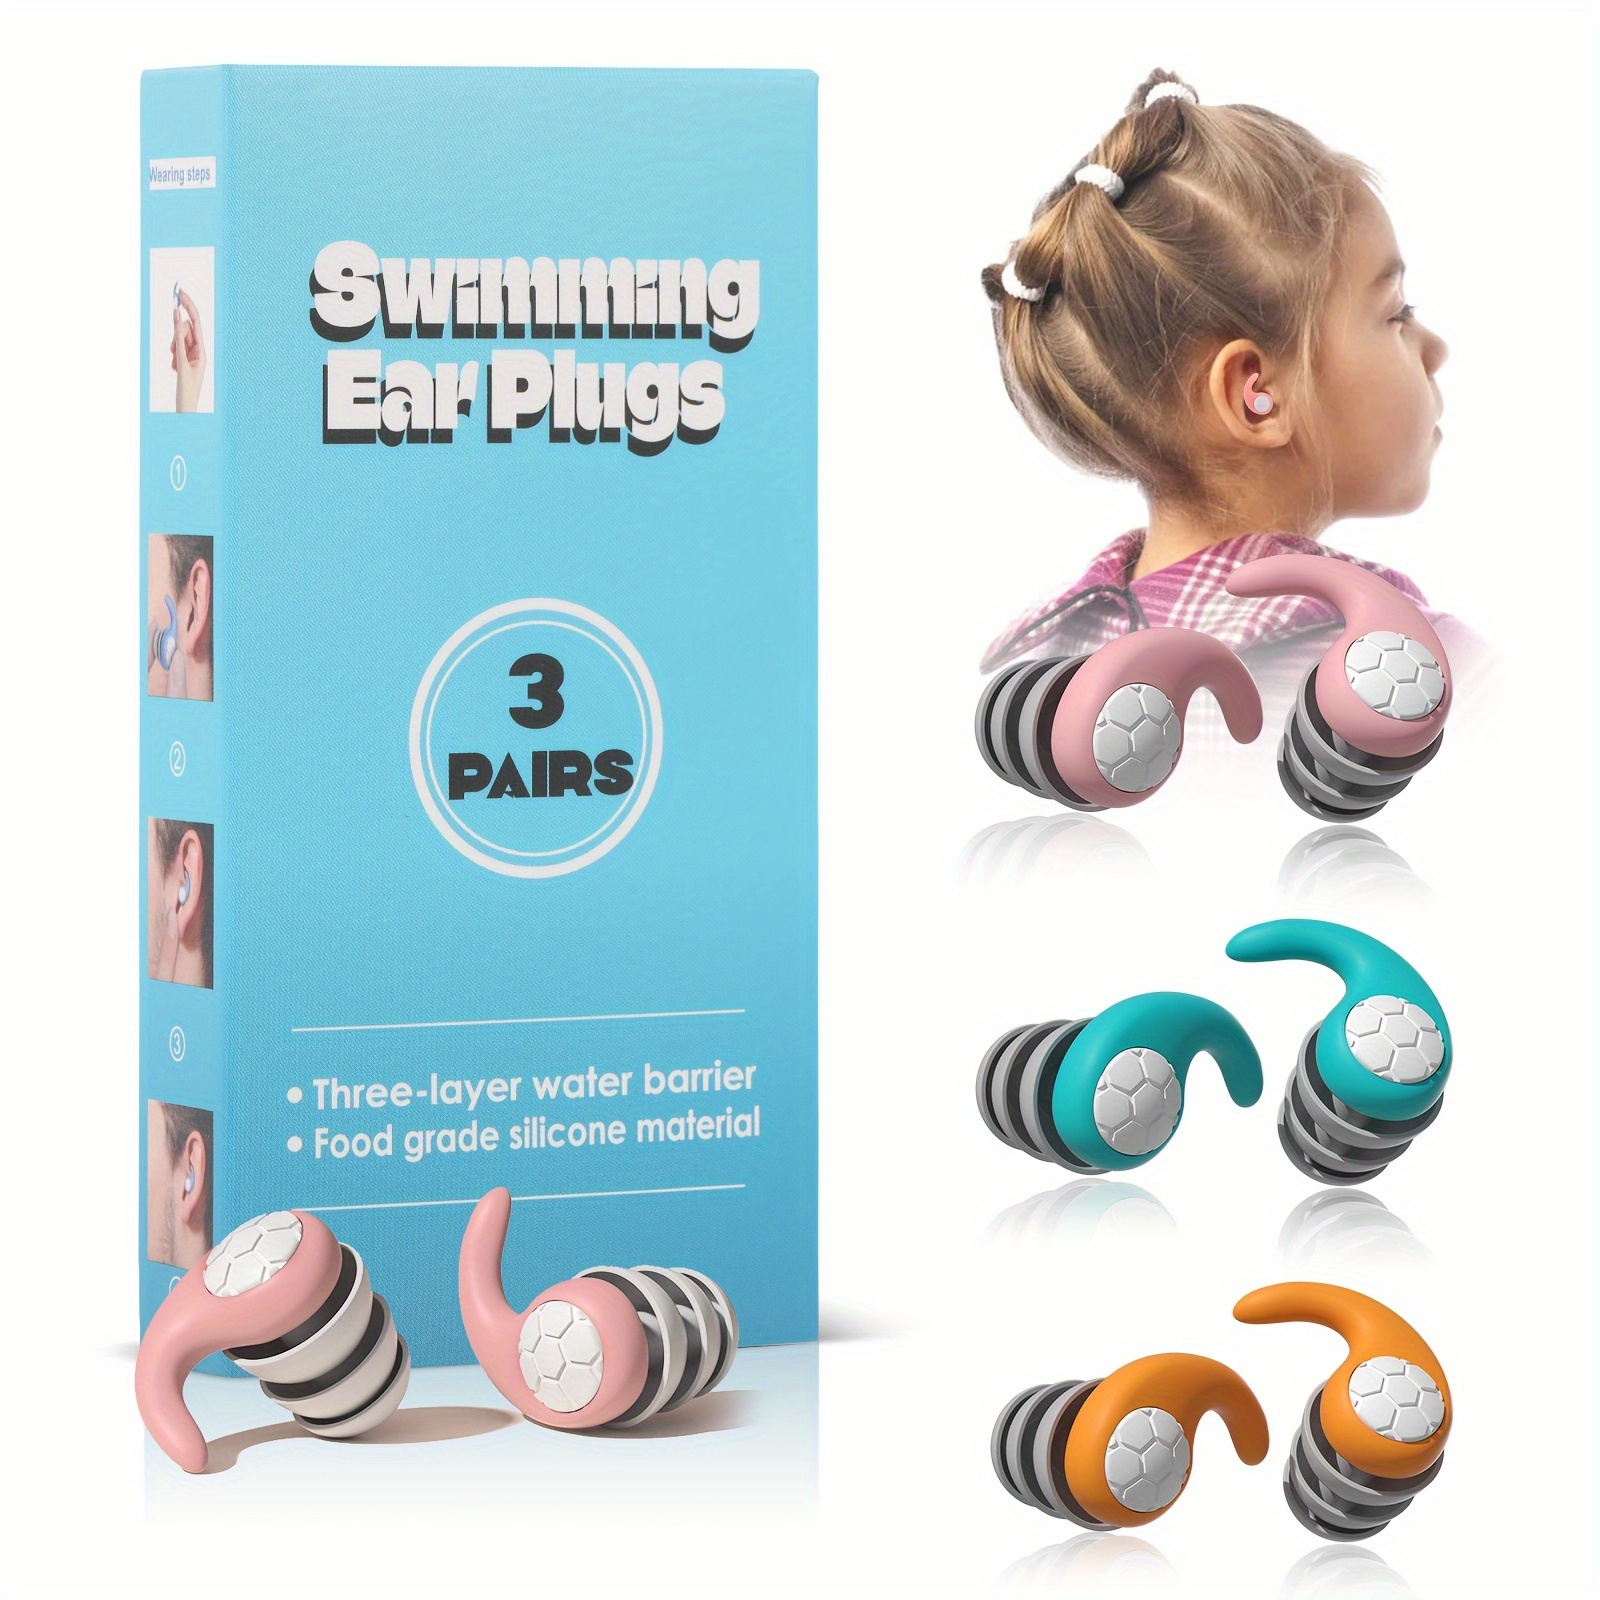 

3 Pairs Swimming Earplugs For Kids, Waterproof Silicone Swimming Earplugs, For Swimming, Surfing, Diving, Water Sports